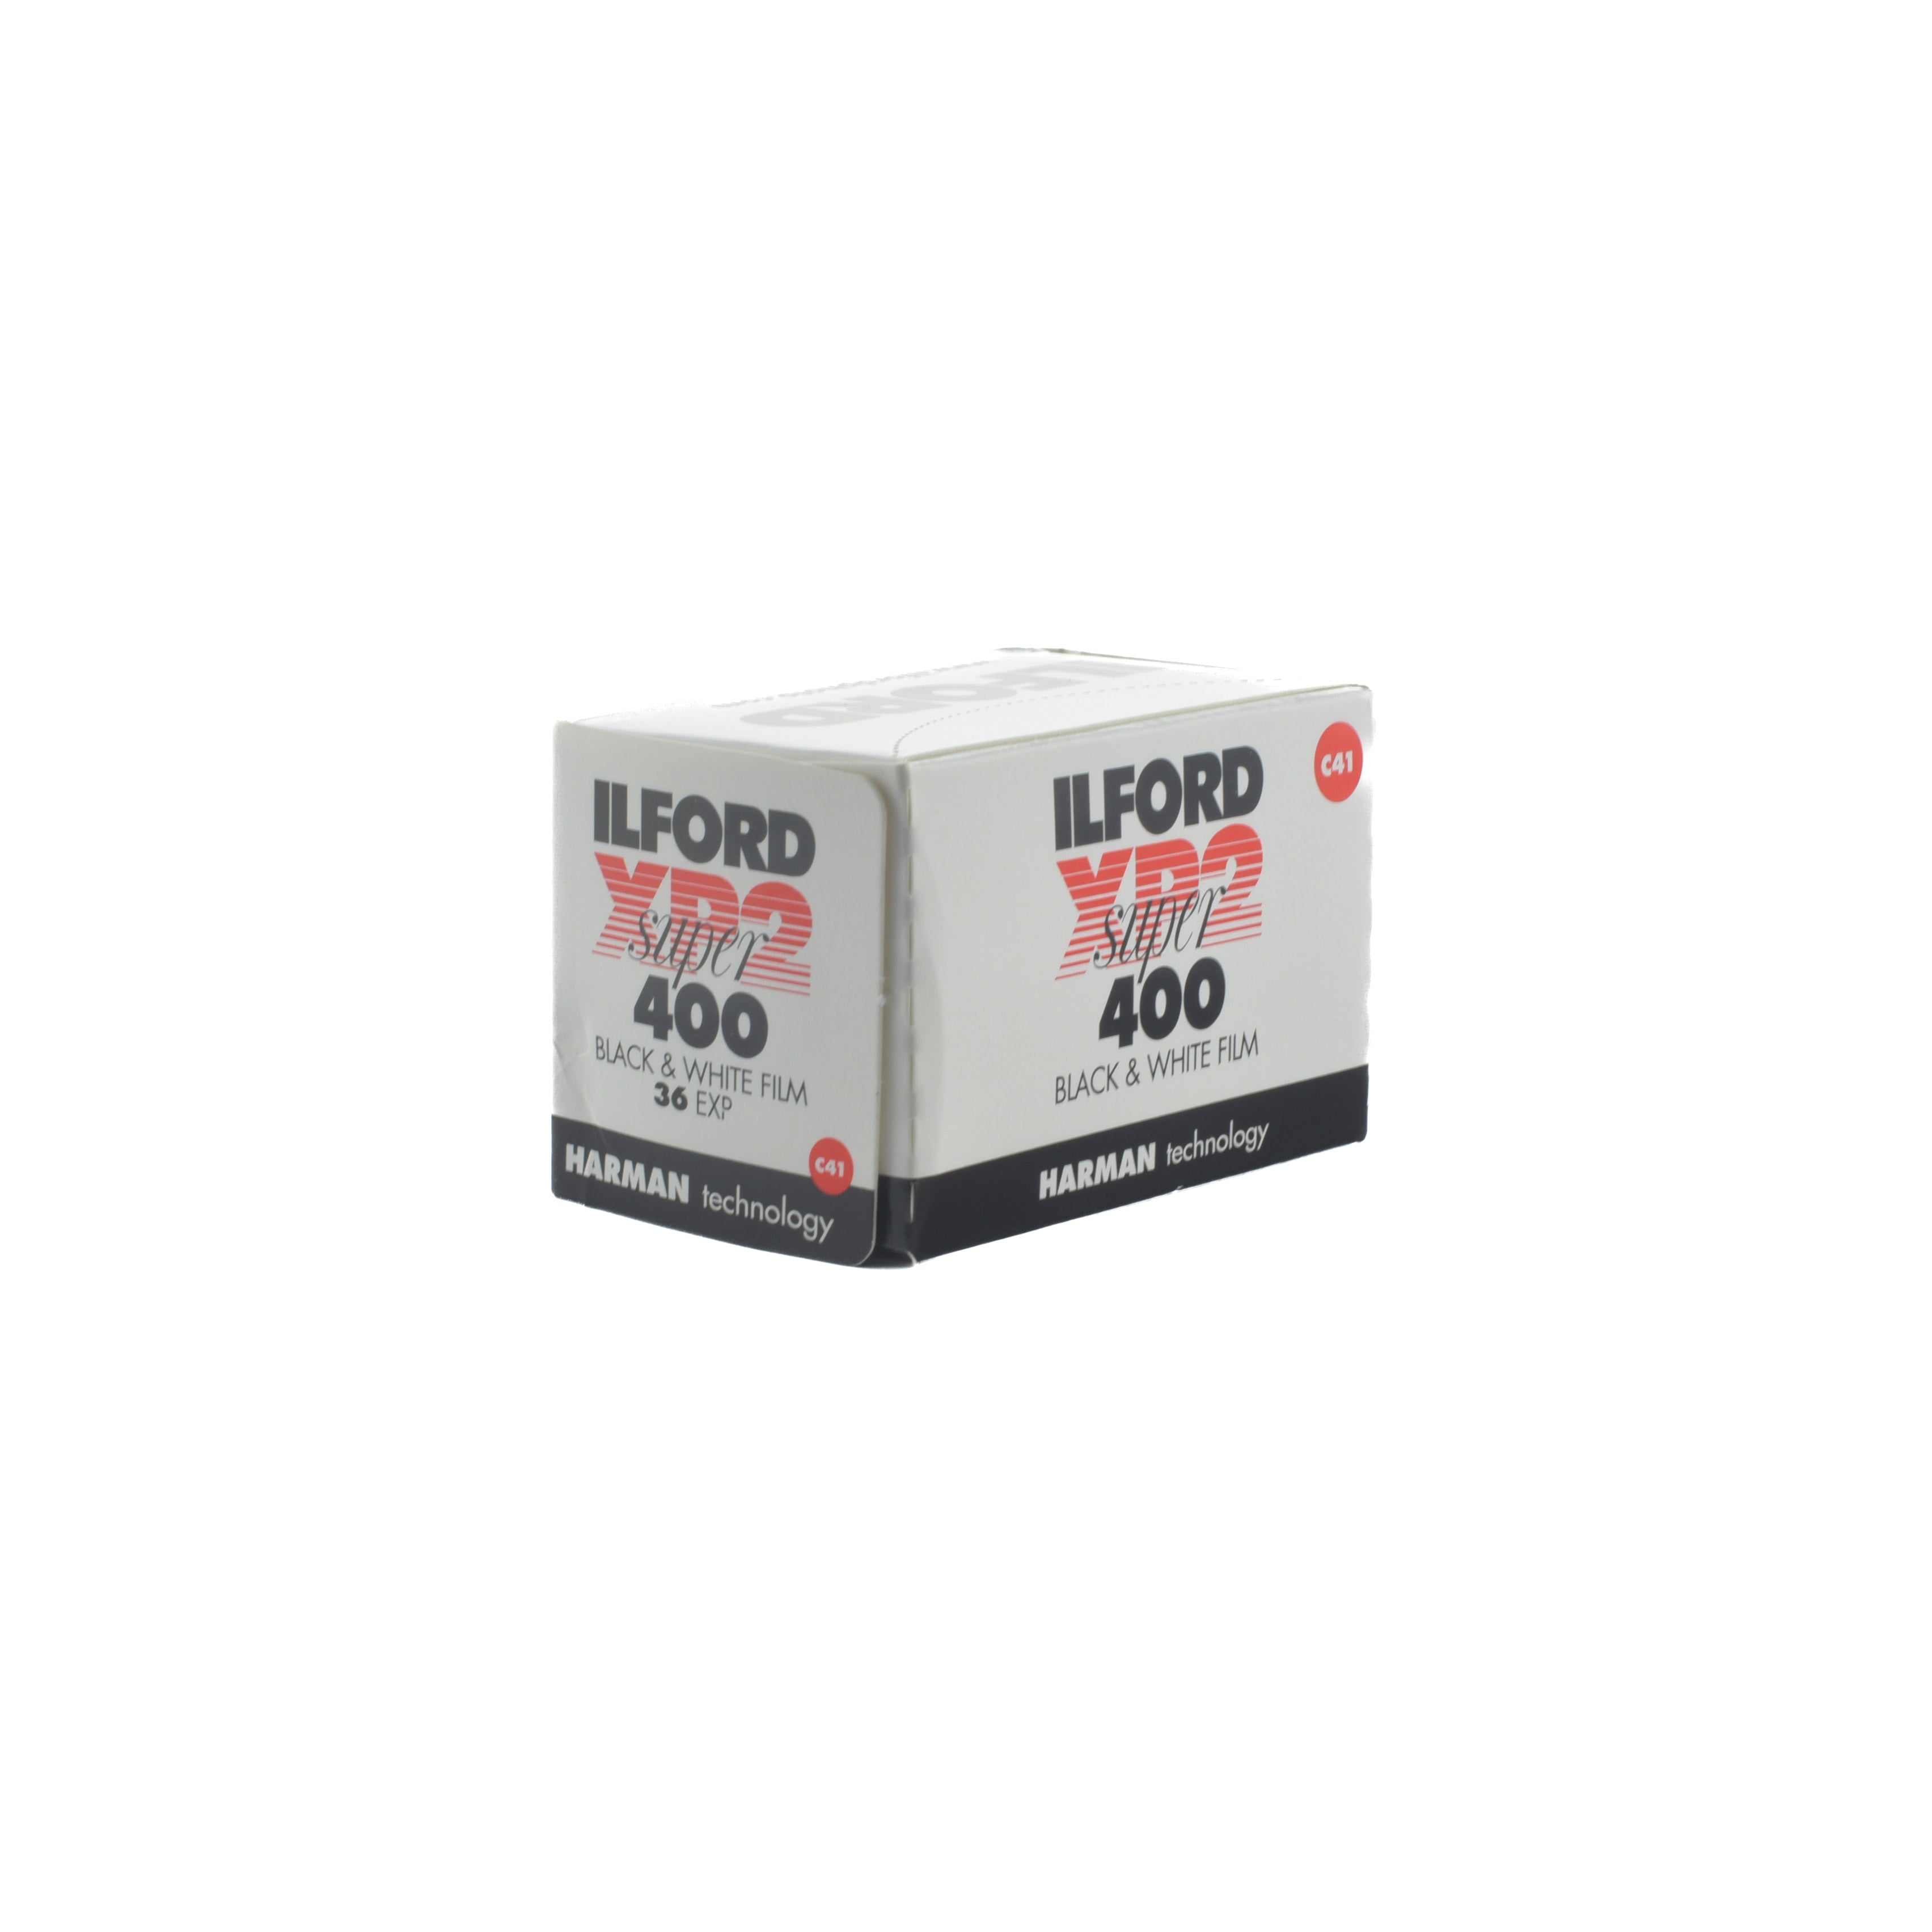 Ilford XP2 Super 400 35mm Black & White Film (36 exposures)